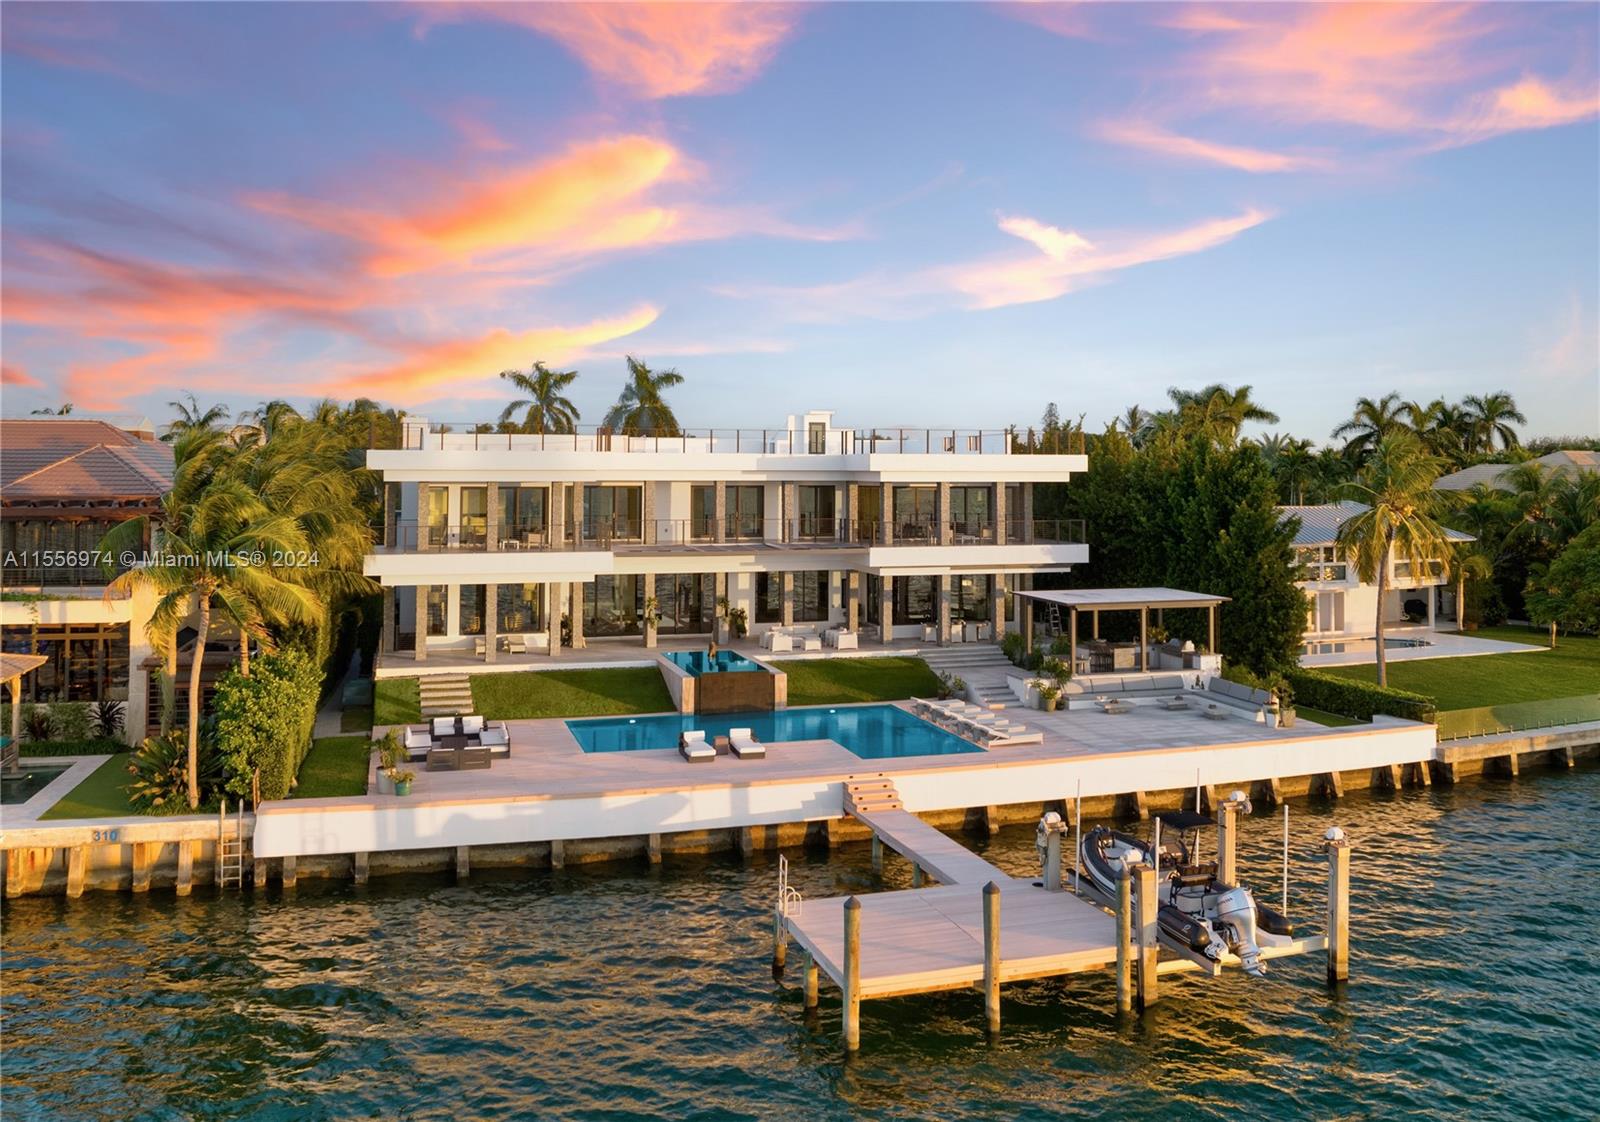 Rental Property at 330 Harbor Dr, Key Biscayne, Miami-Dade County, Florida - Bedrooms: 6 
Bathrooms: 8  - $125,000 MO.